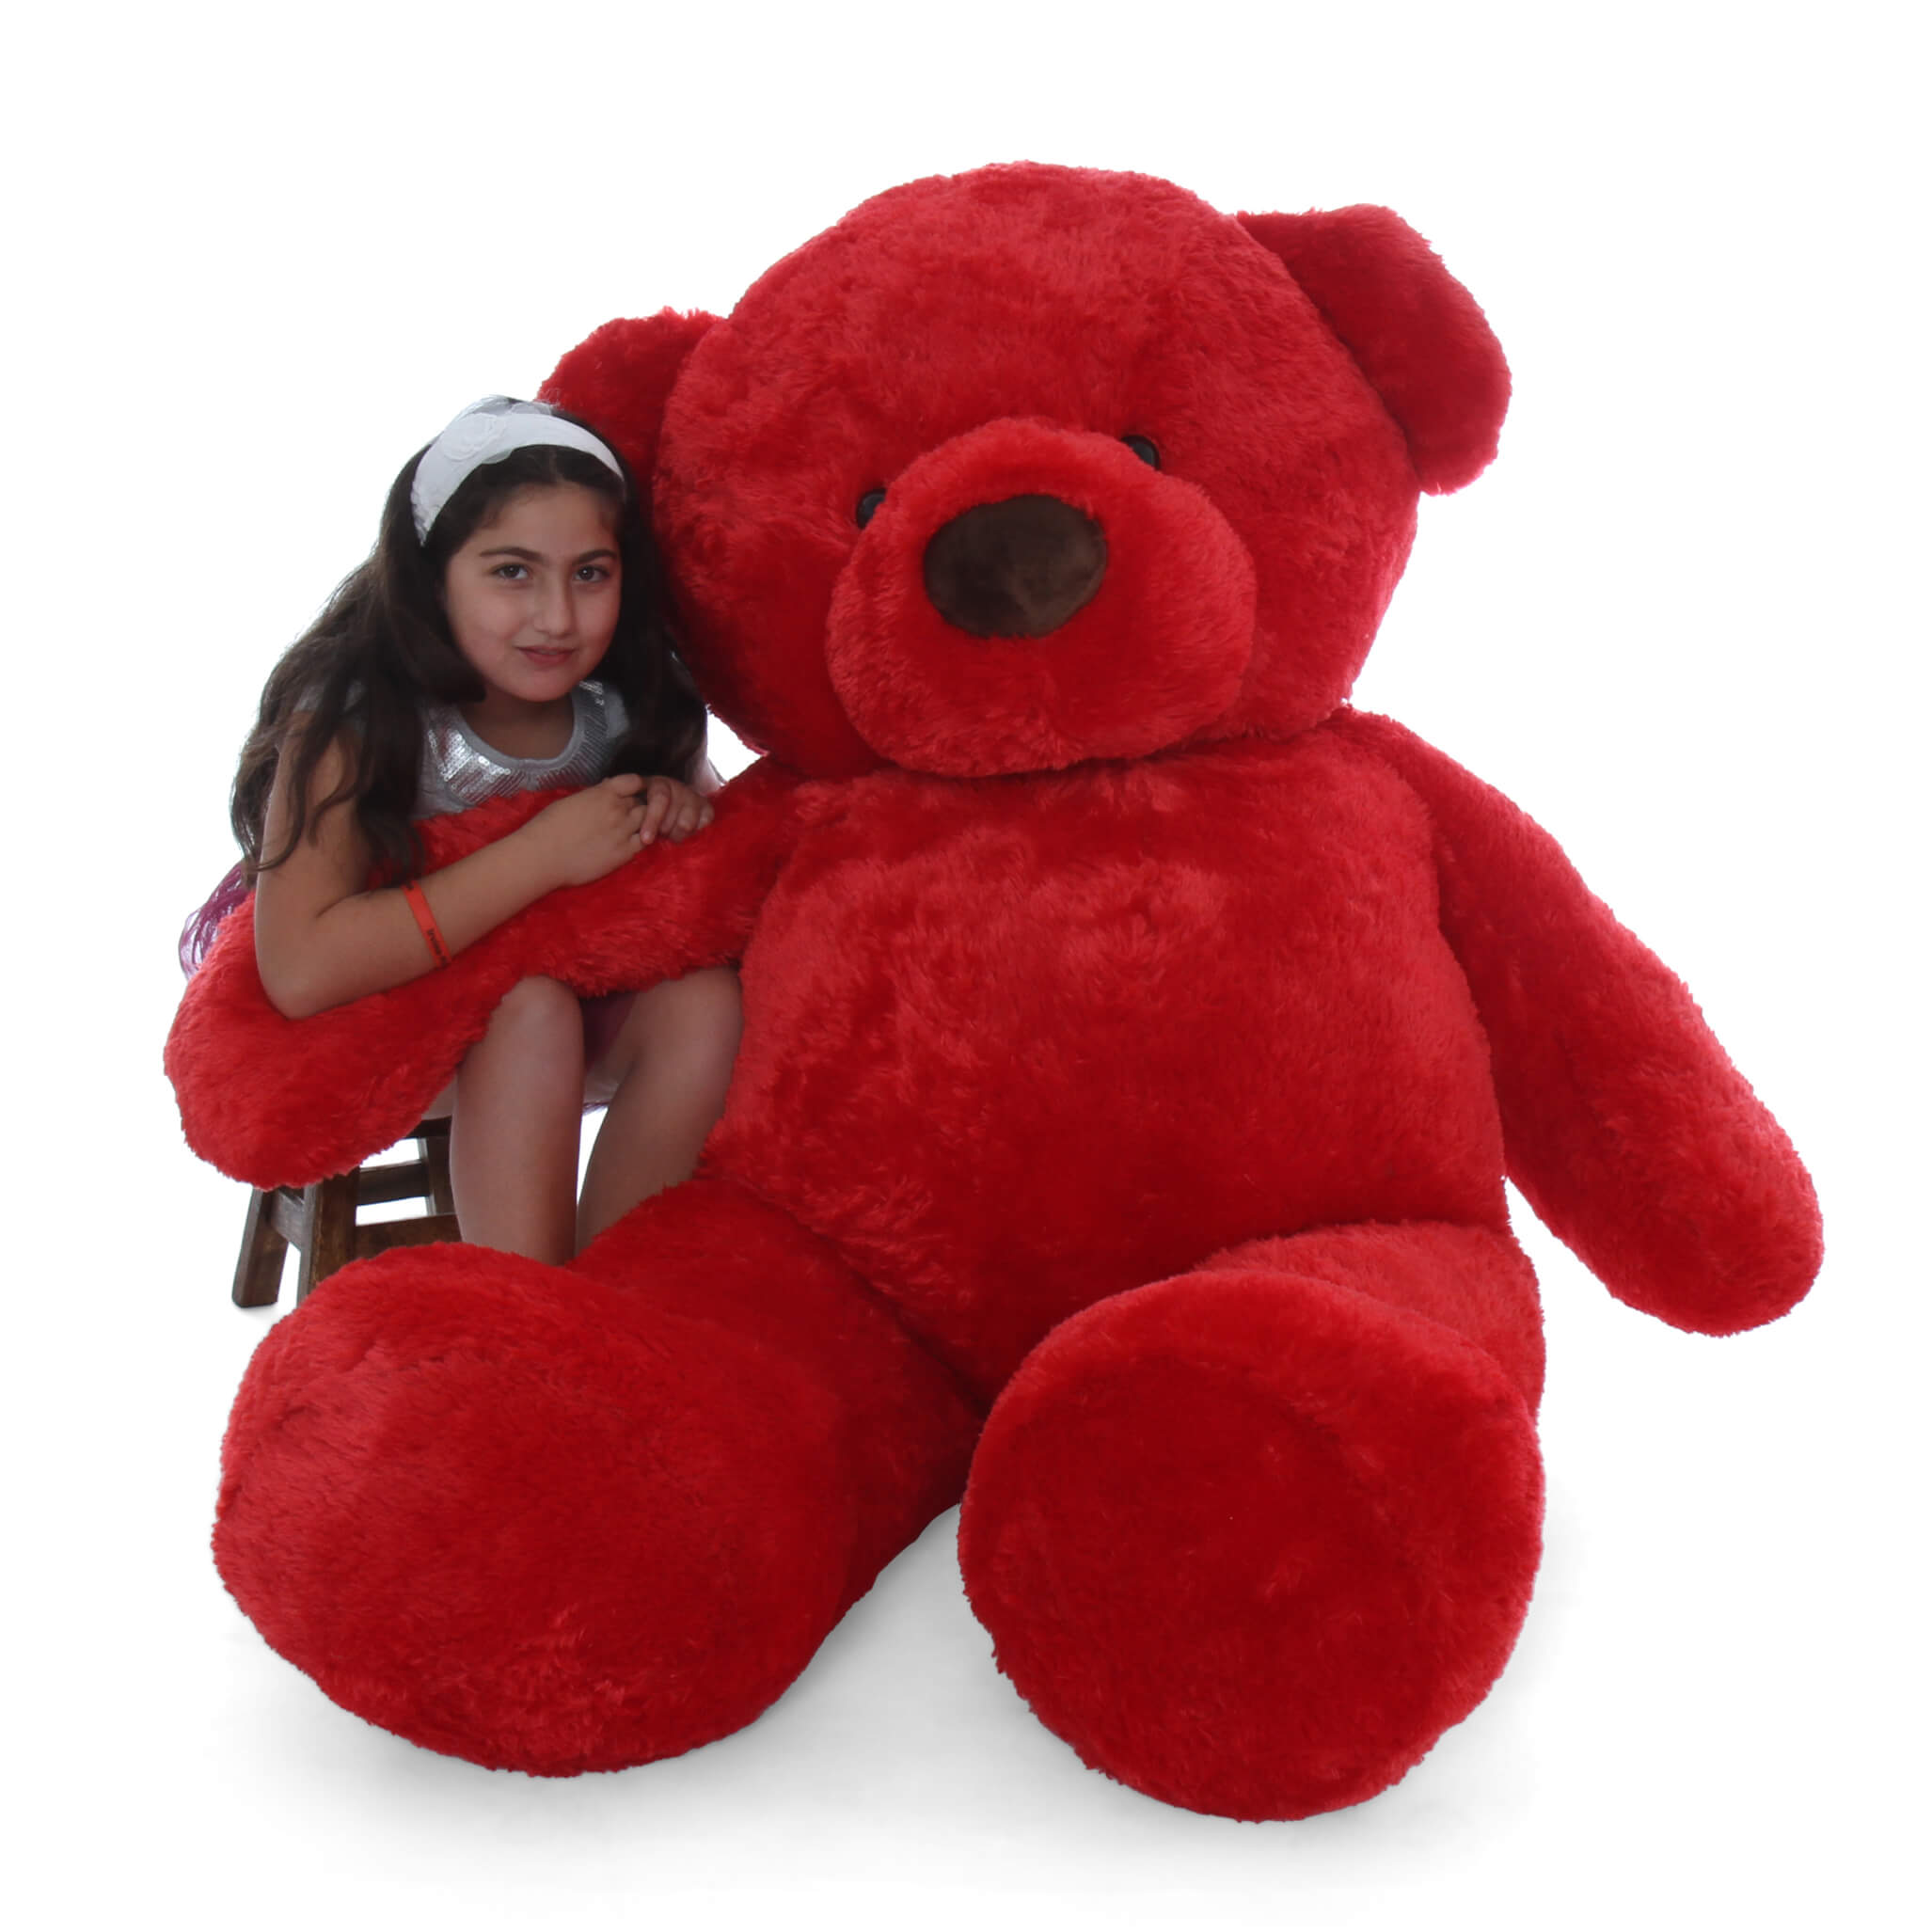 life-size-72in-humongous-red-teddy-bear-riley-chubs-by-giant-teddy-1.jpg